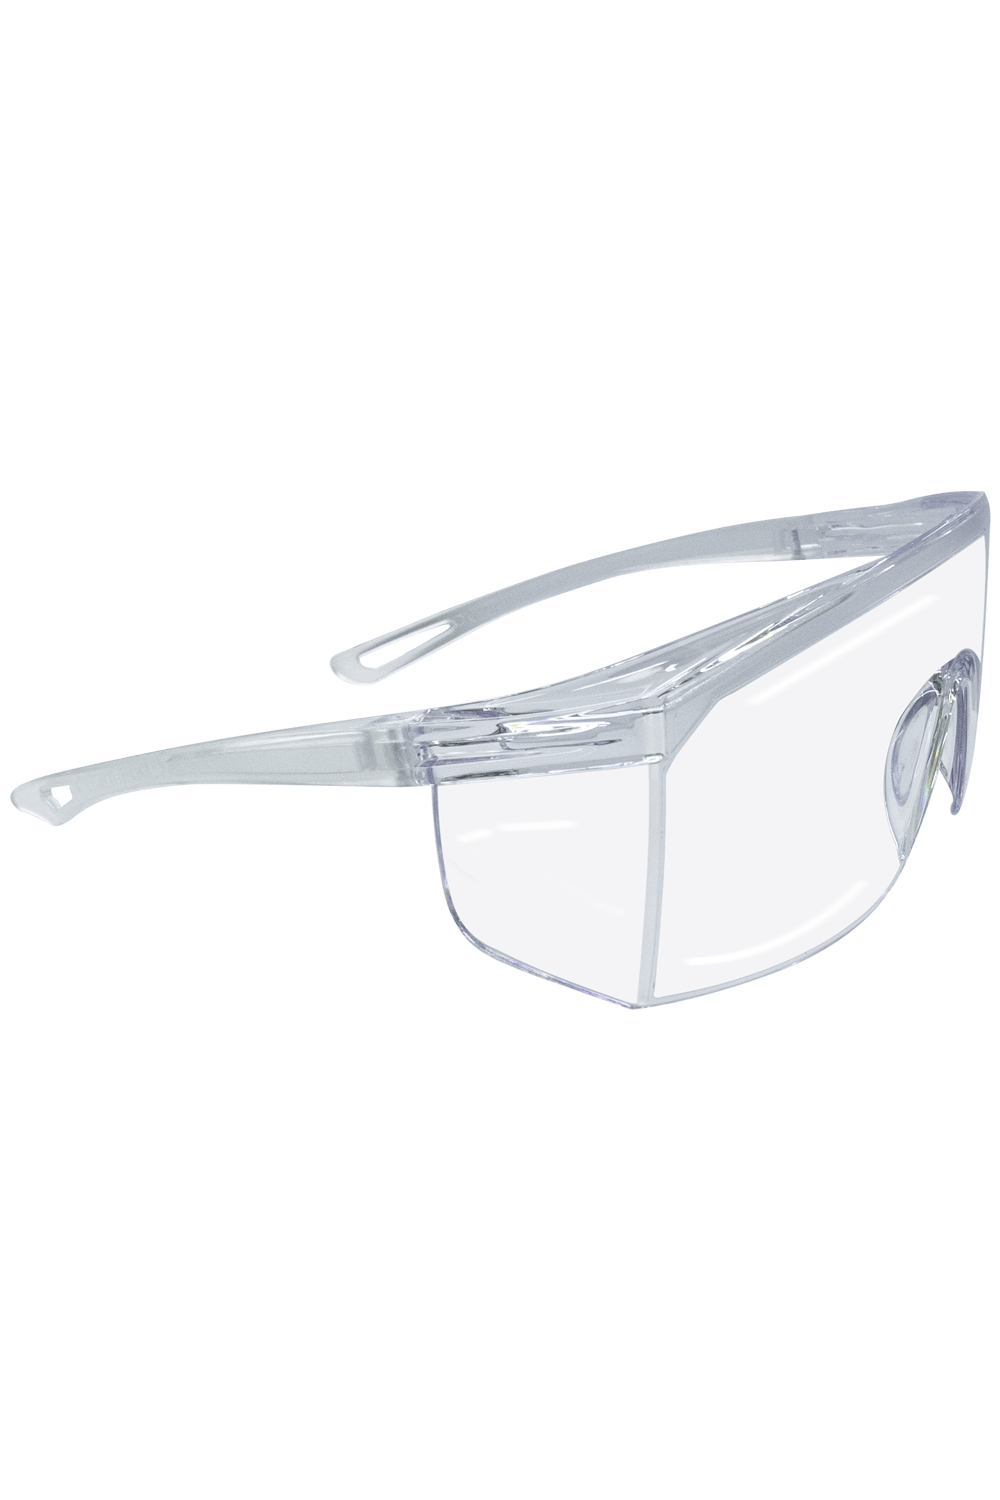 Óculos de proteção formato Jaguar II - Estek - Óculos Protetores - Estek | Site Oficial